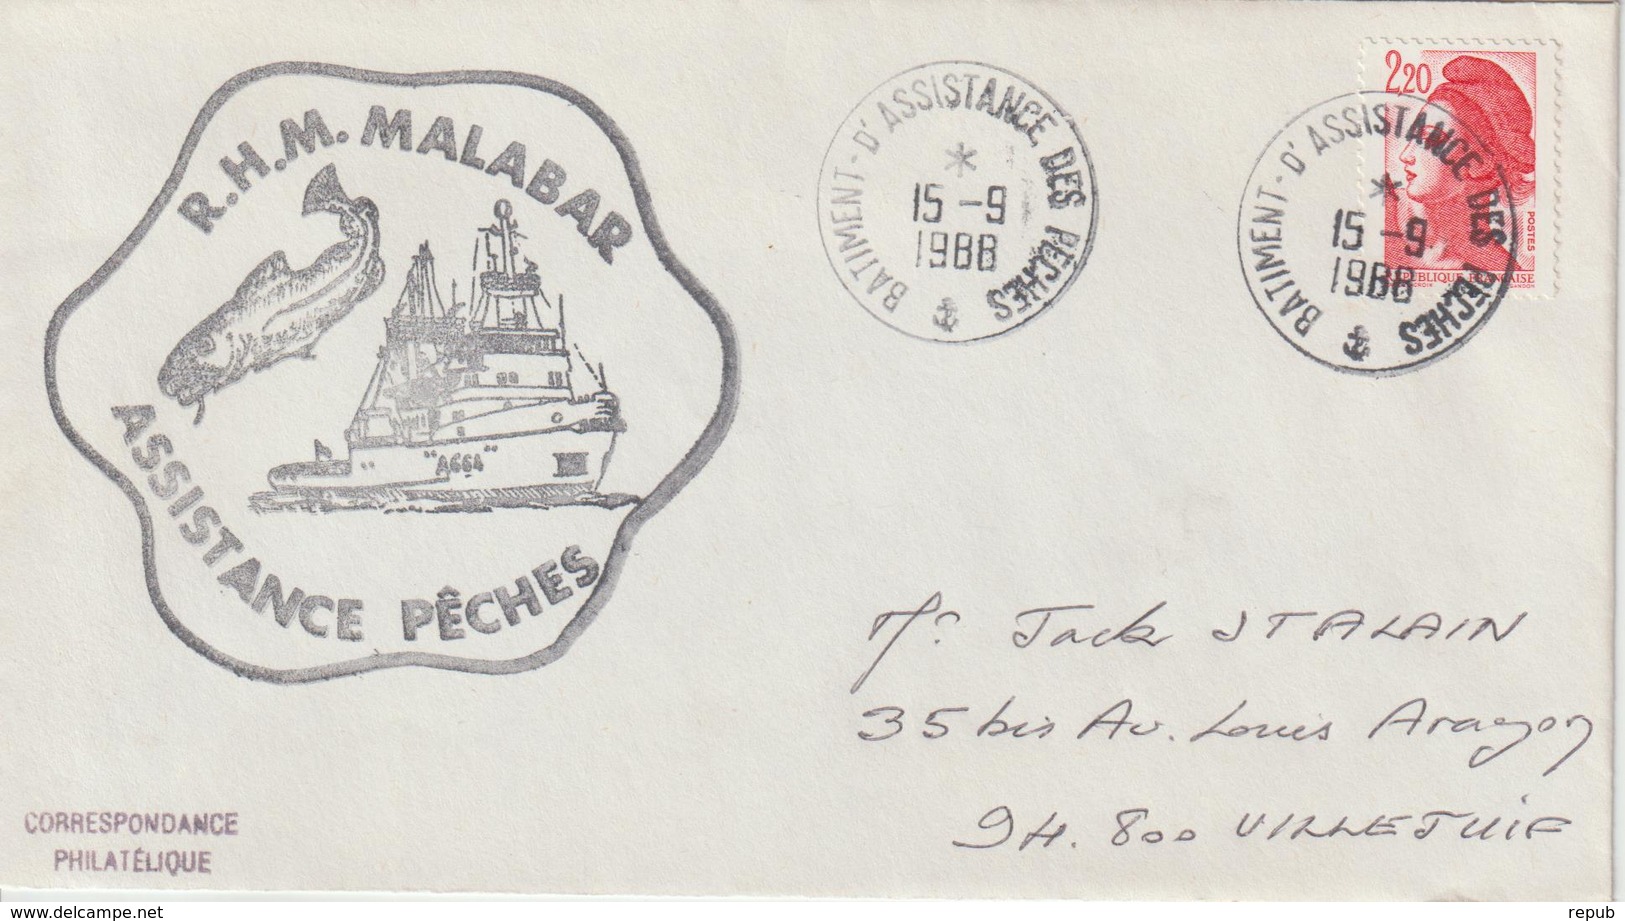 France RHM Malabar Assistance Des Peches 1988 - Naval Post